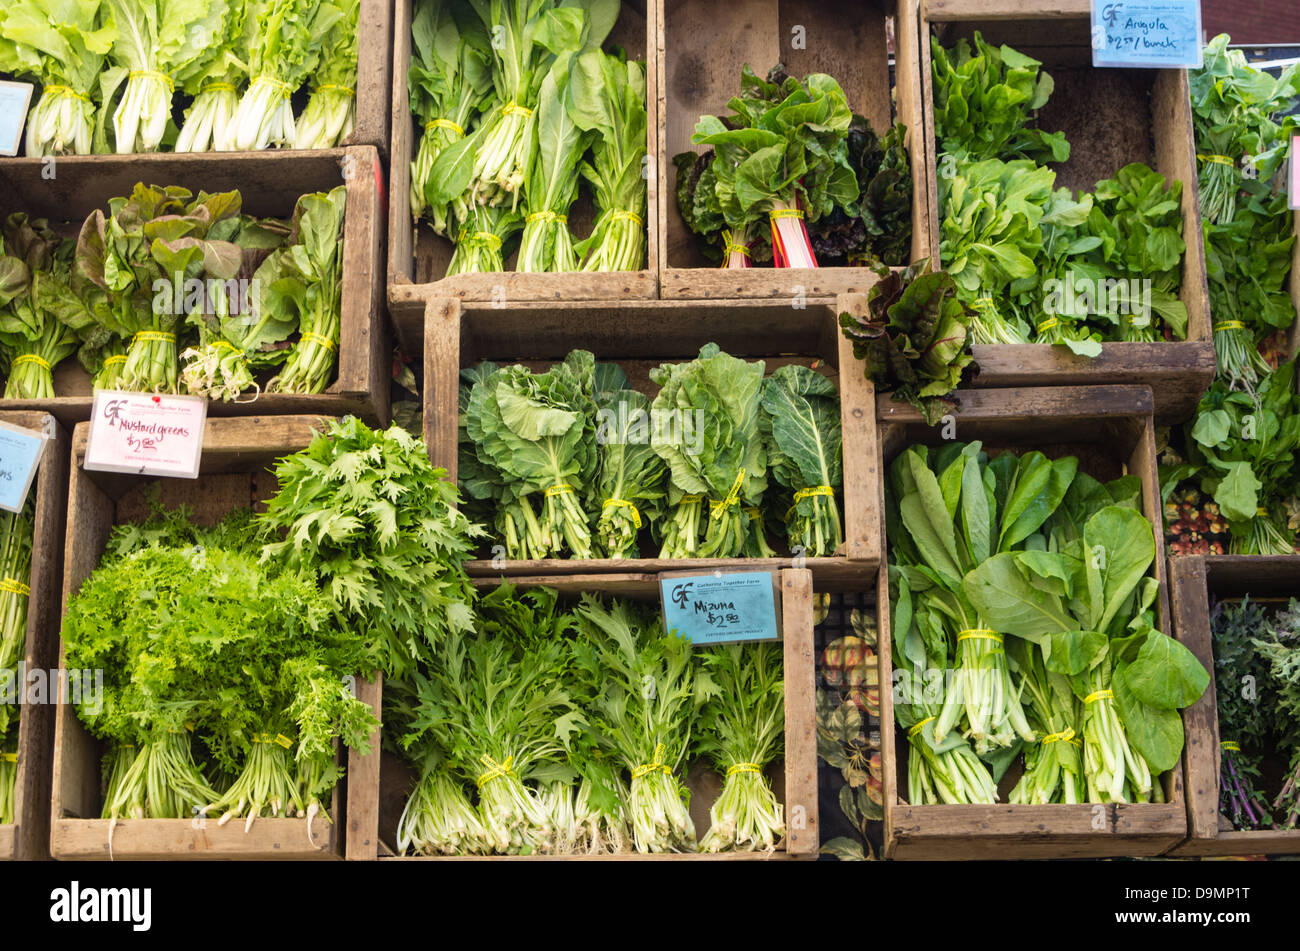 Portland Oregon United States. Freshly harvested salad greens on display at the farmer's market Stock Photo